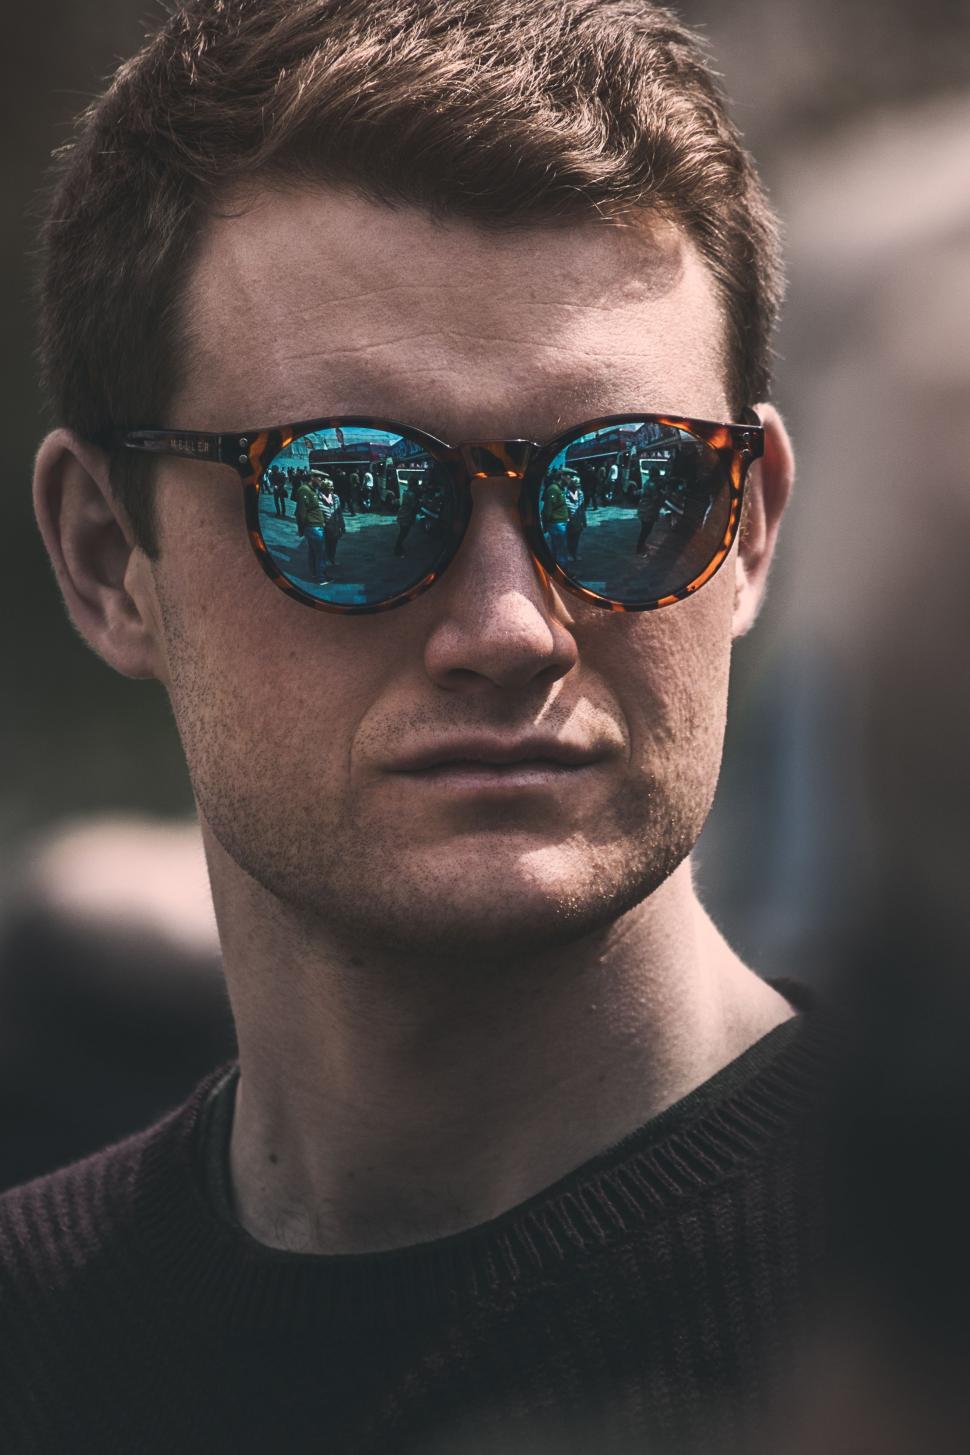 Free Image of Man Wearing Sunglasses Looking at Camera 